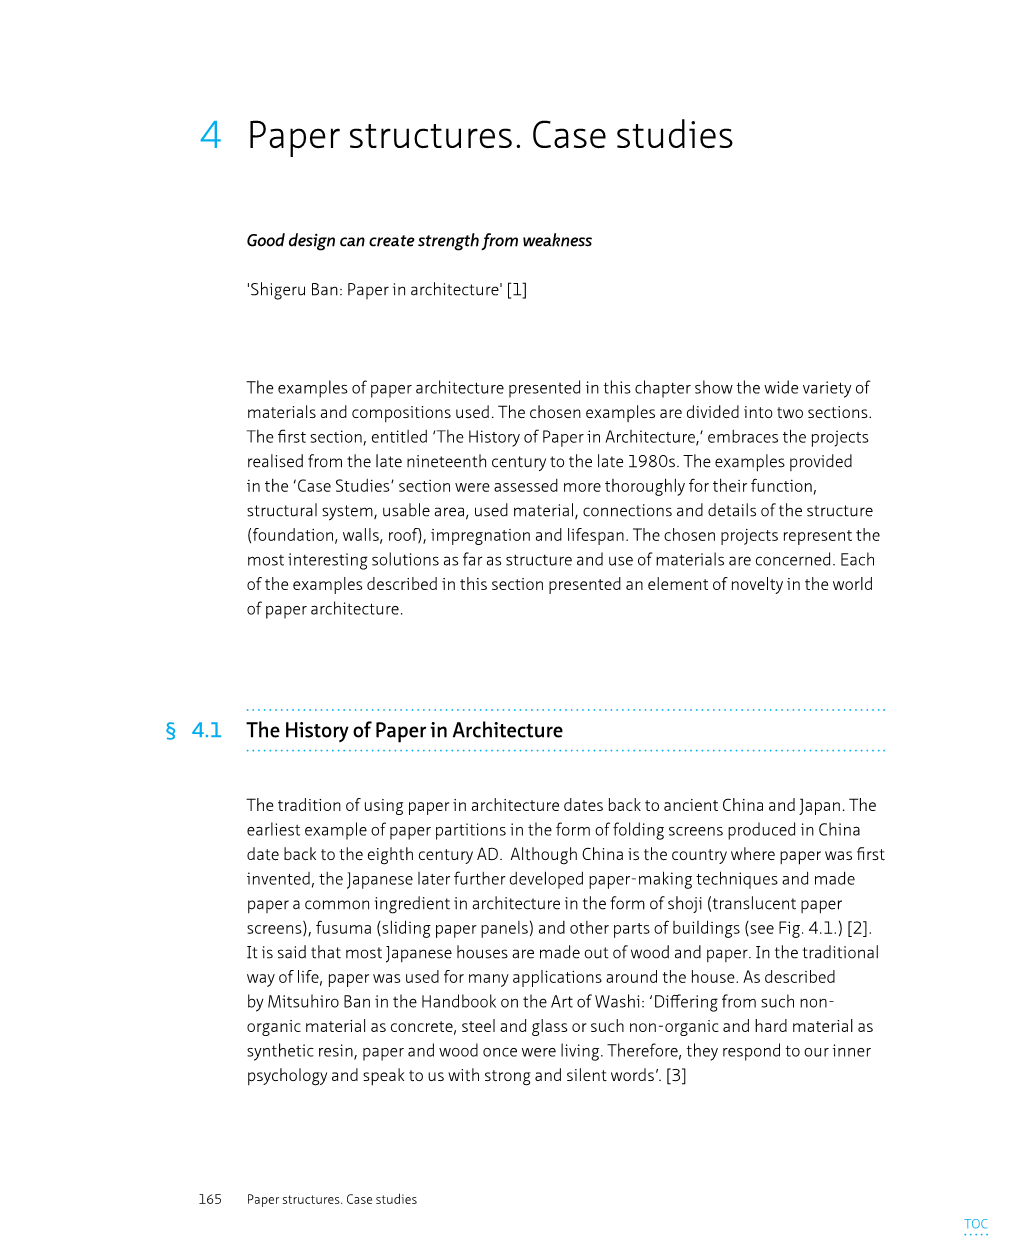 4 Paper Structures. Case Studies